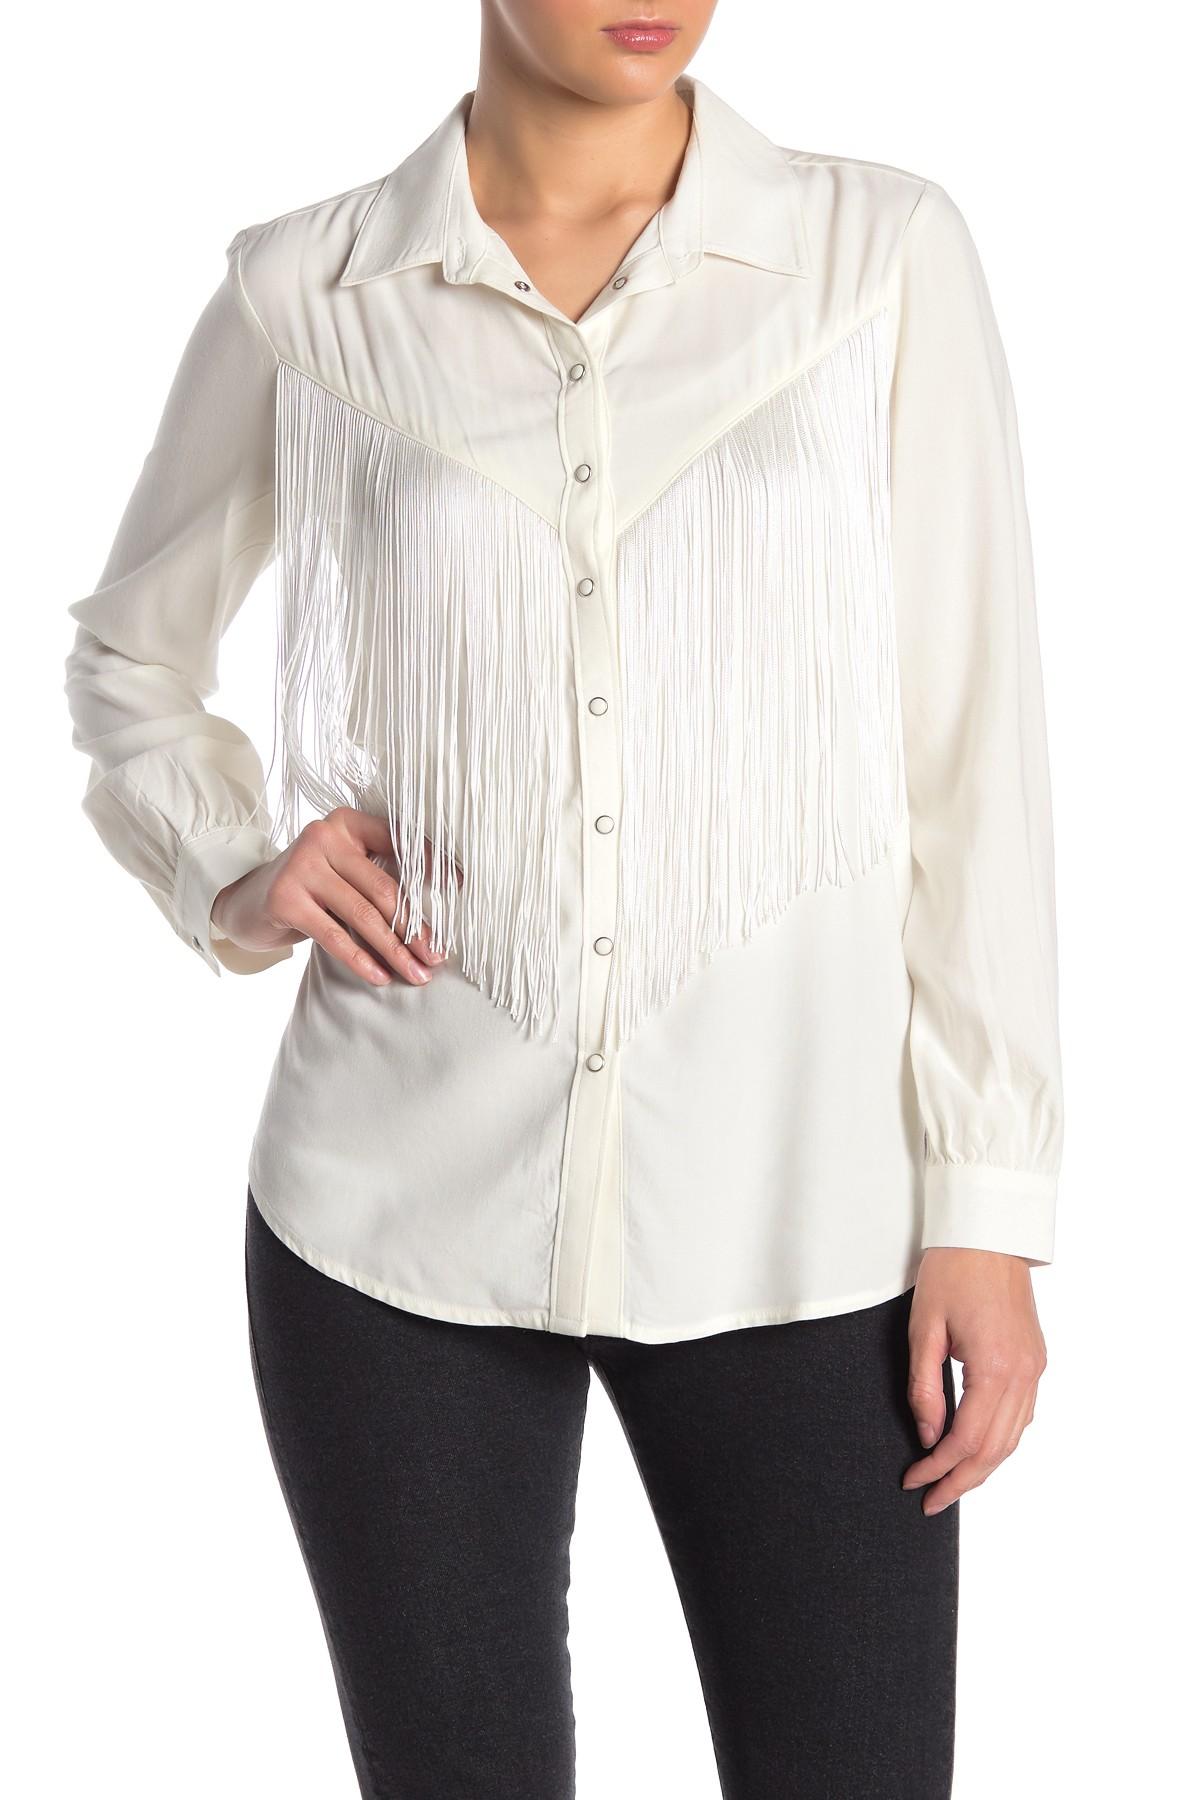 Levi's Annie Western Fringe Shirt in White | Lyst